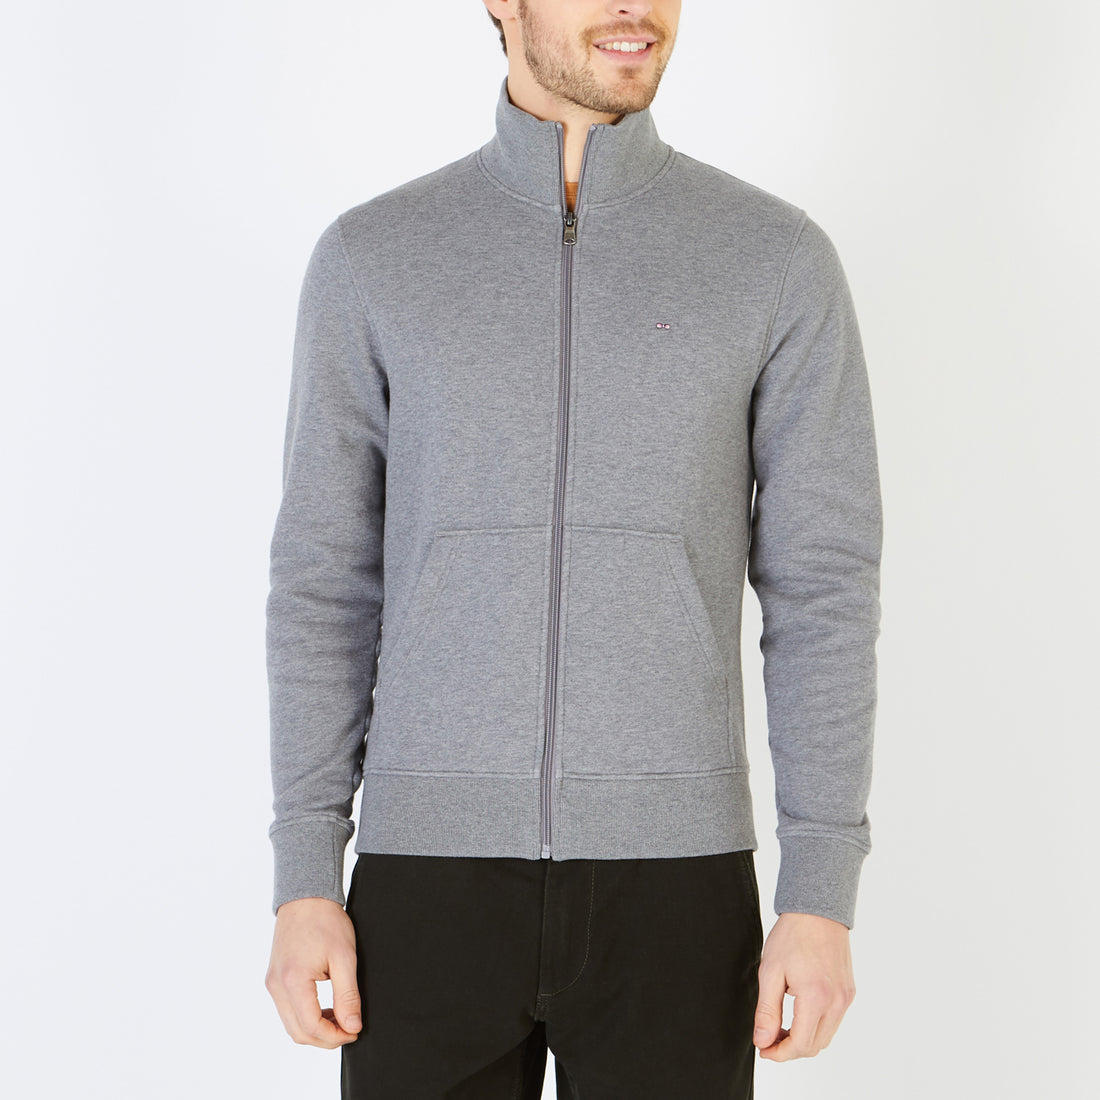 Plain Gray Zipped High-Neck Sweatshirt